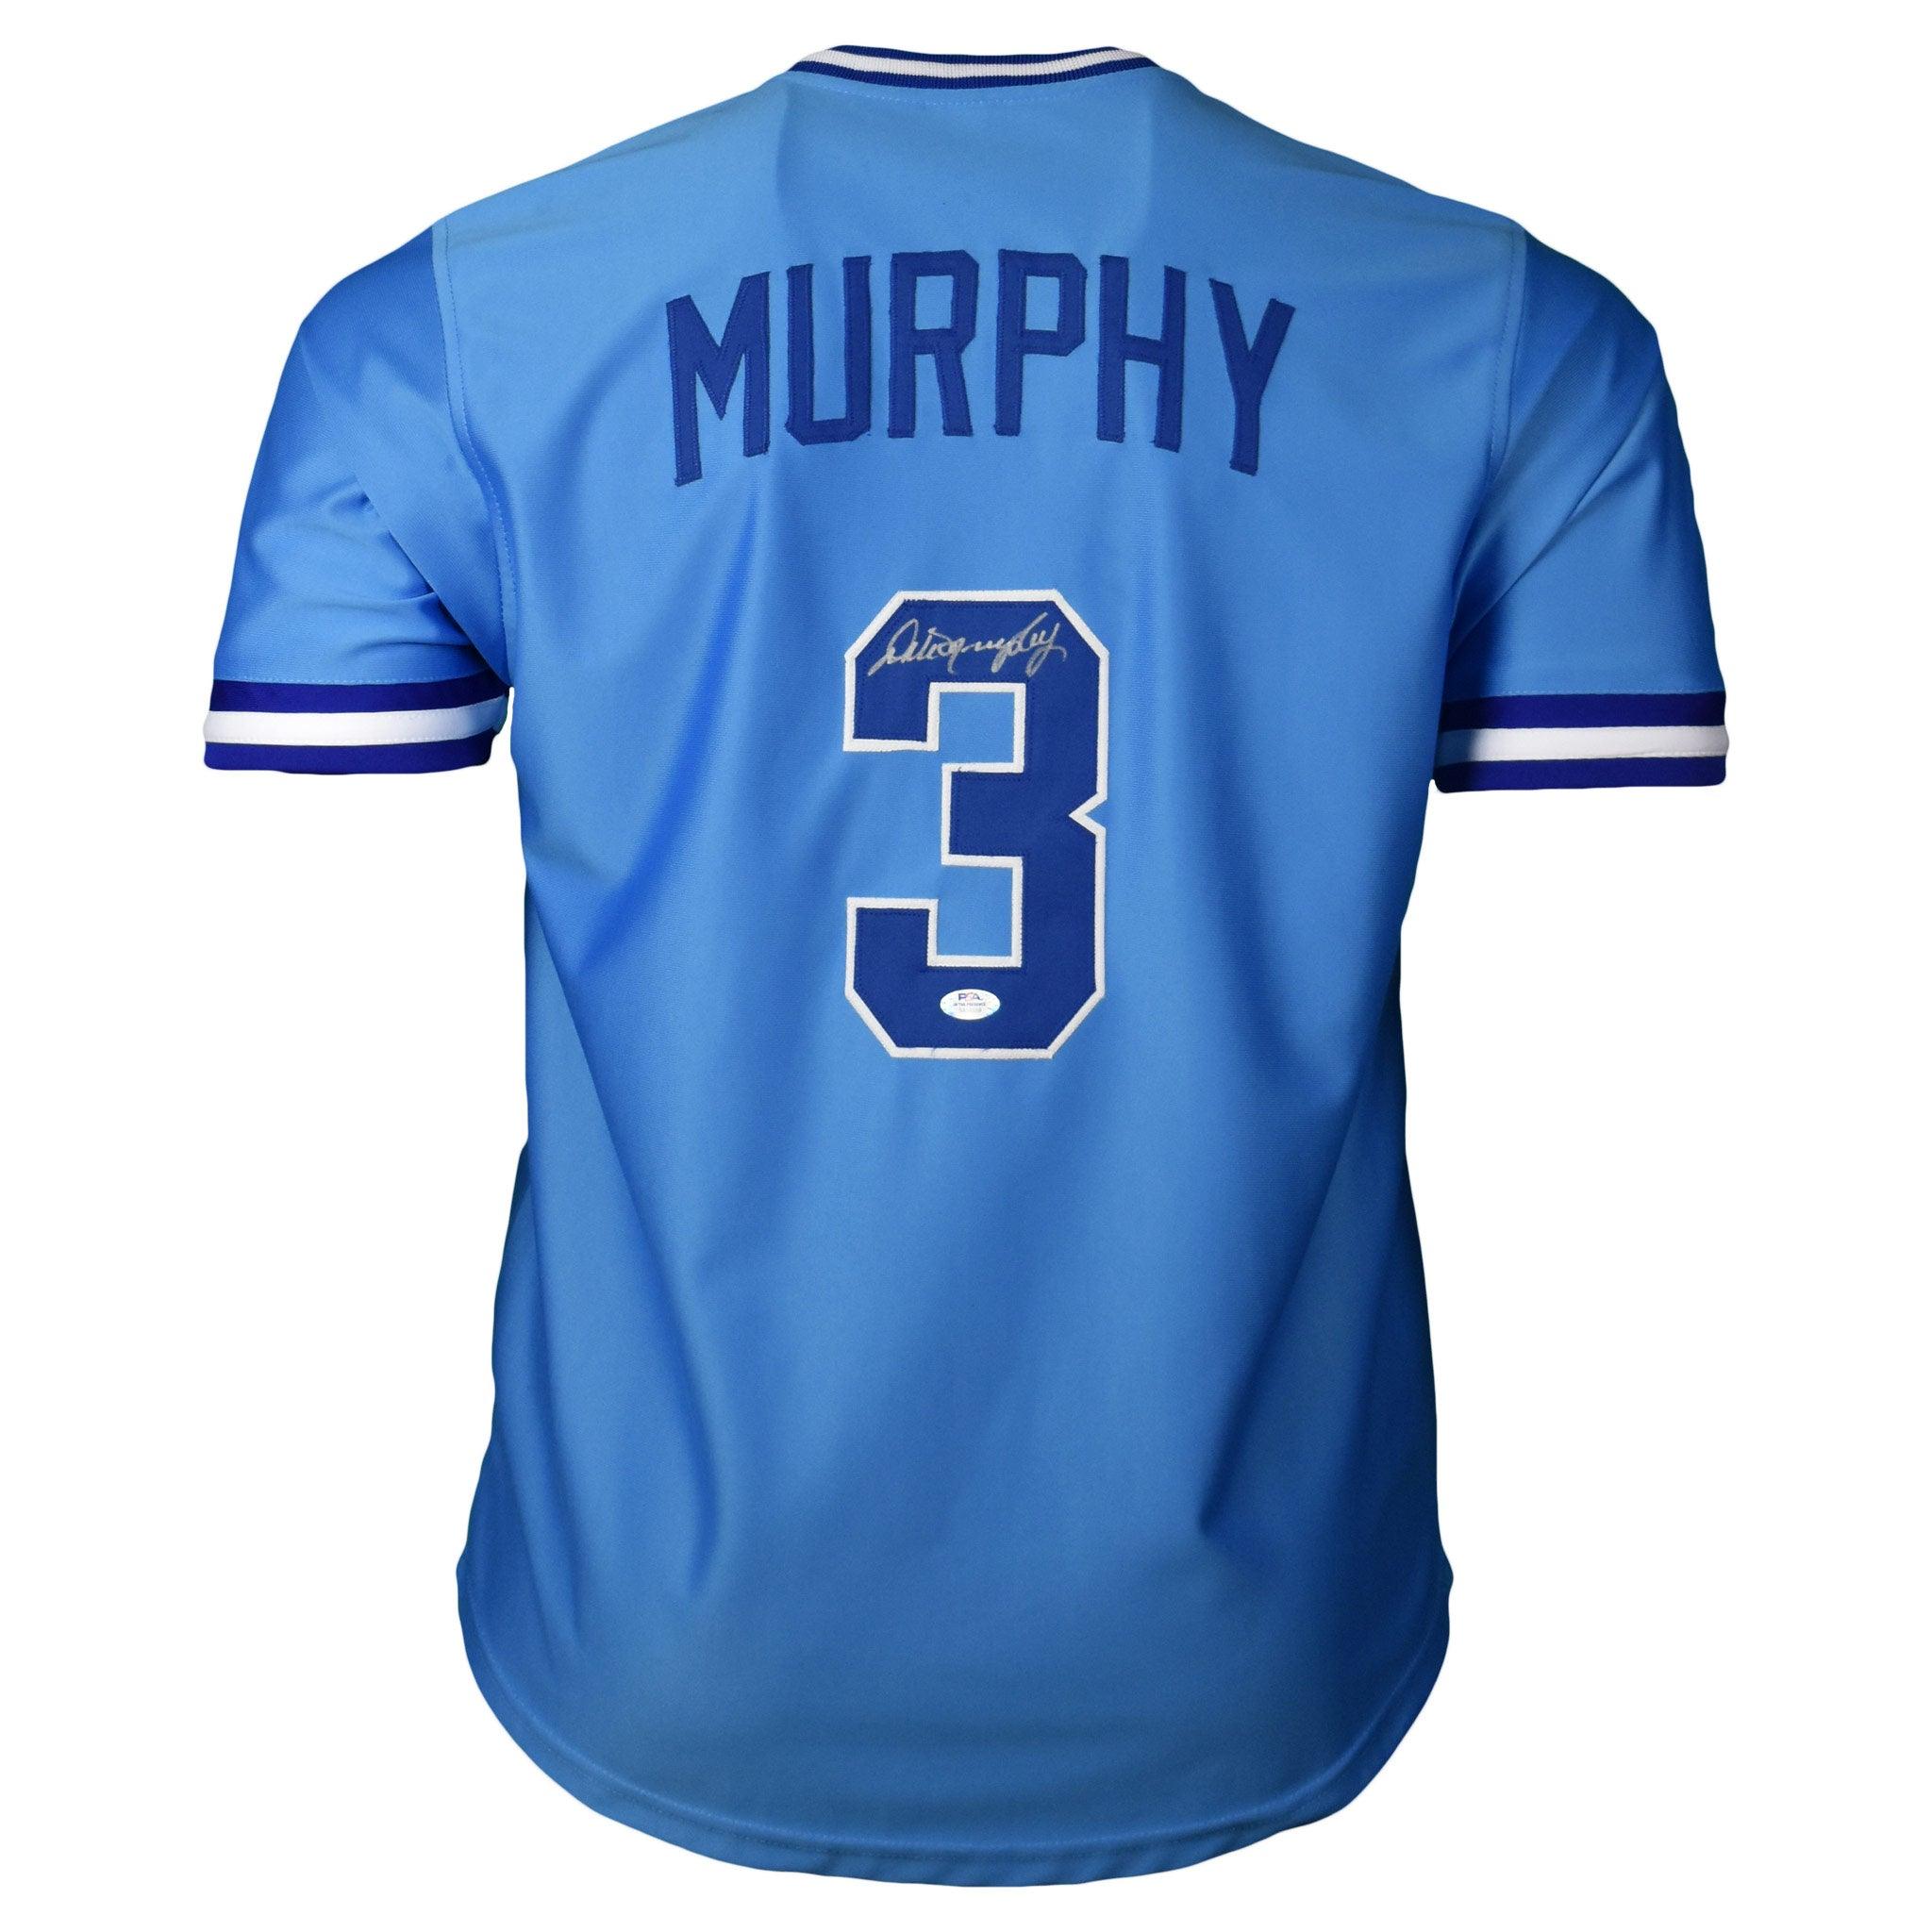 Dale Murphy MLB Atlanta Braves Autographed Baseball Jersey for Sale in  Dunedin, FL - OfferUp